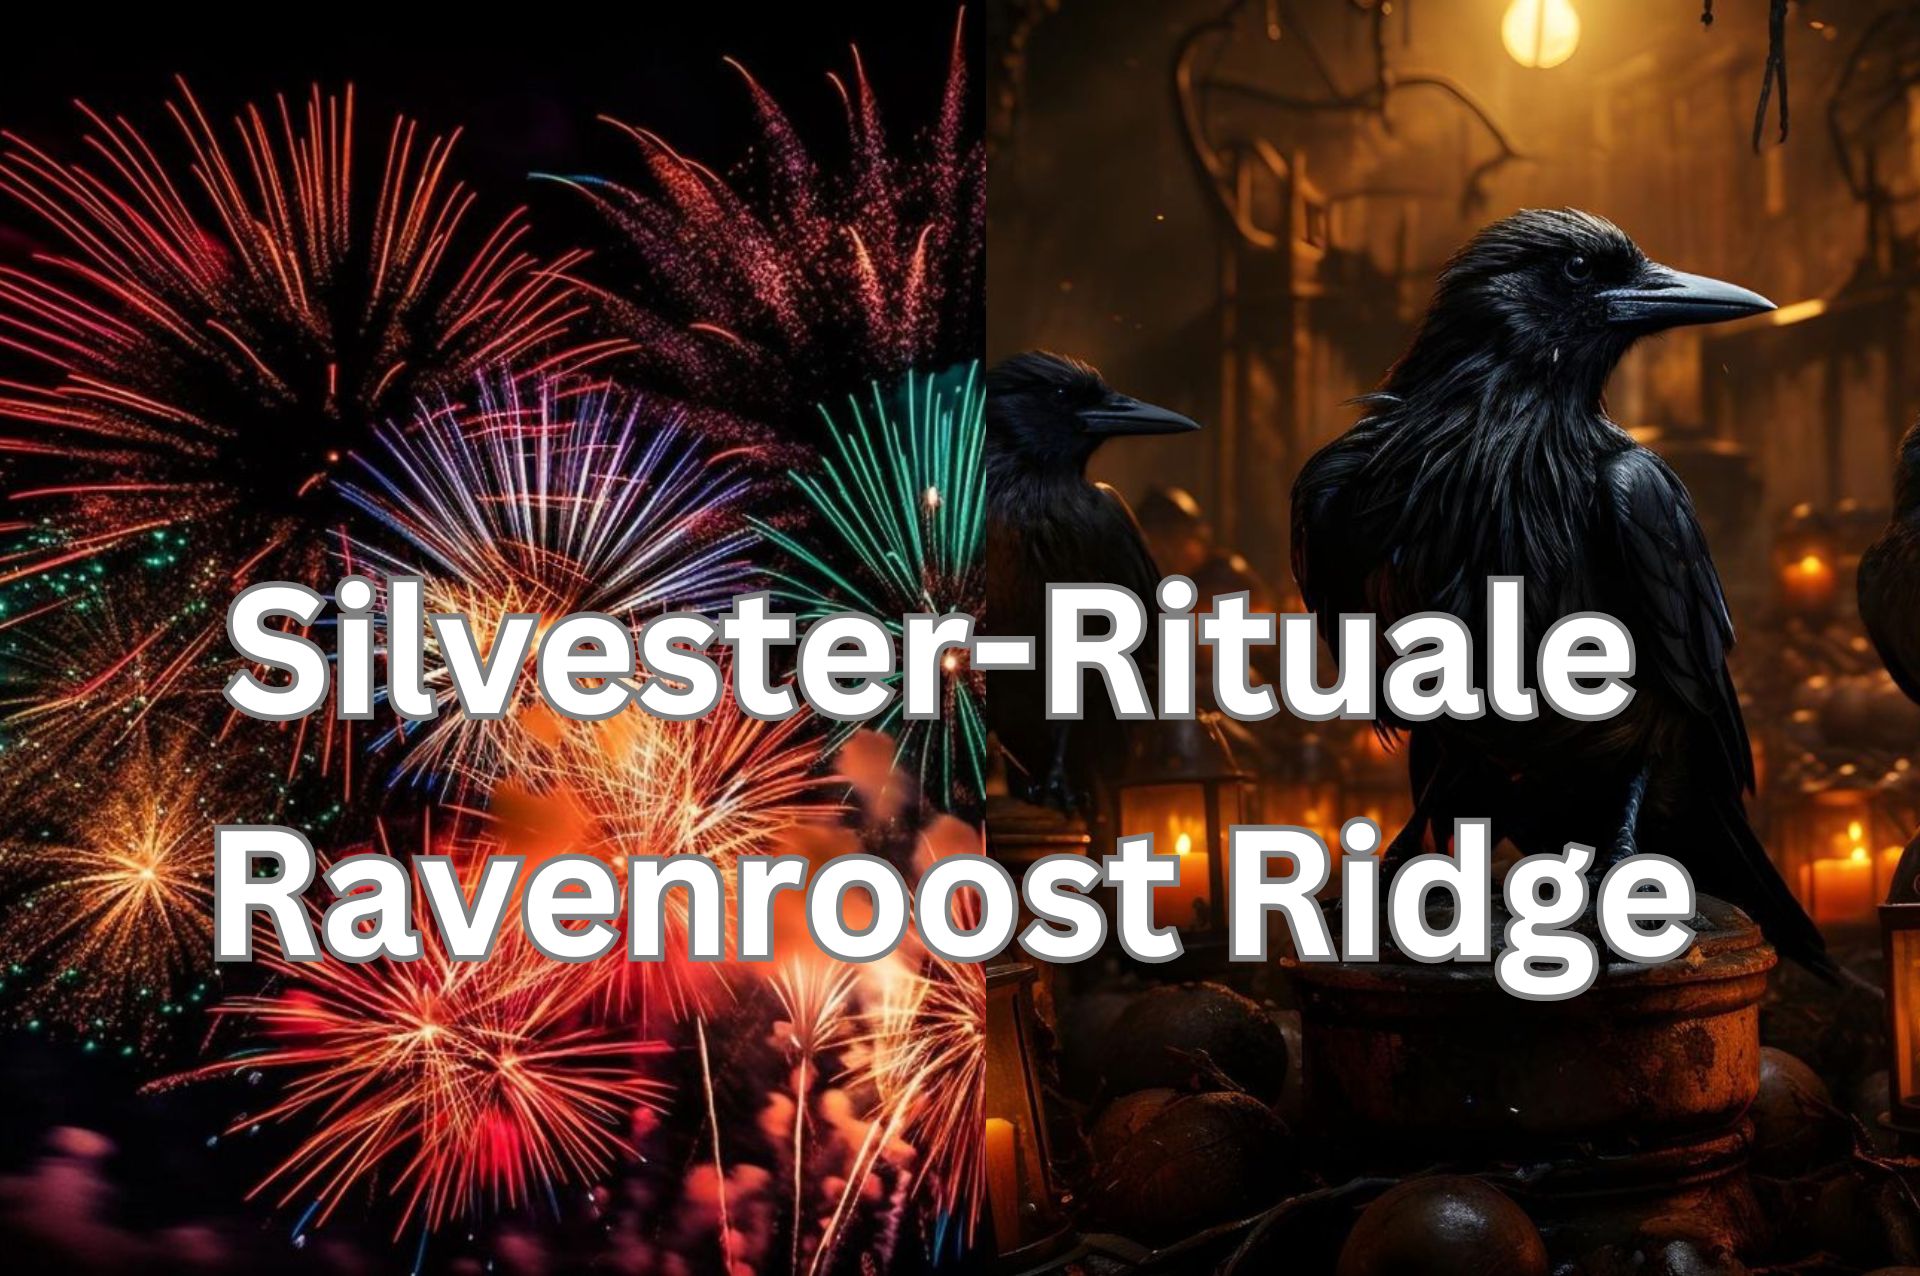 Silvester-Rituale und Ravenroost Ridge